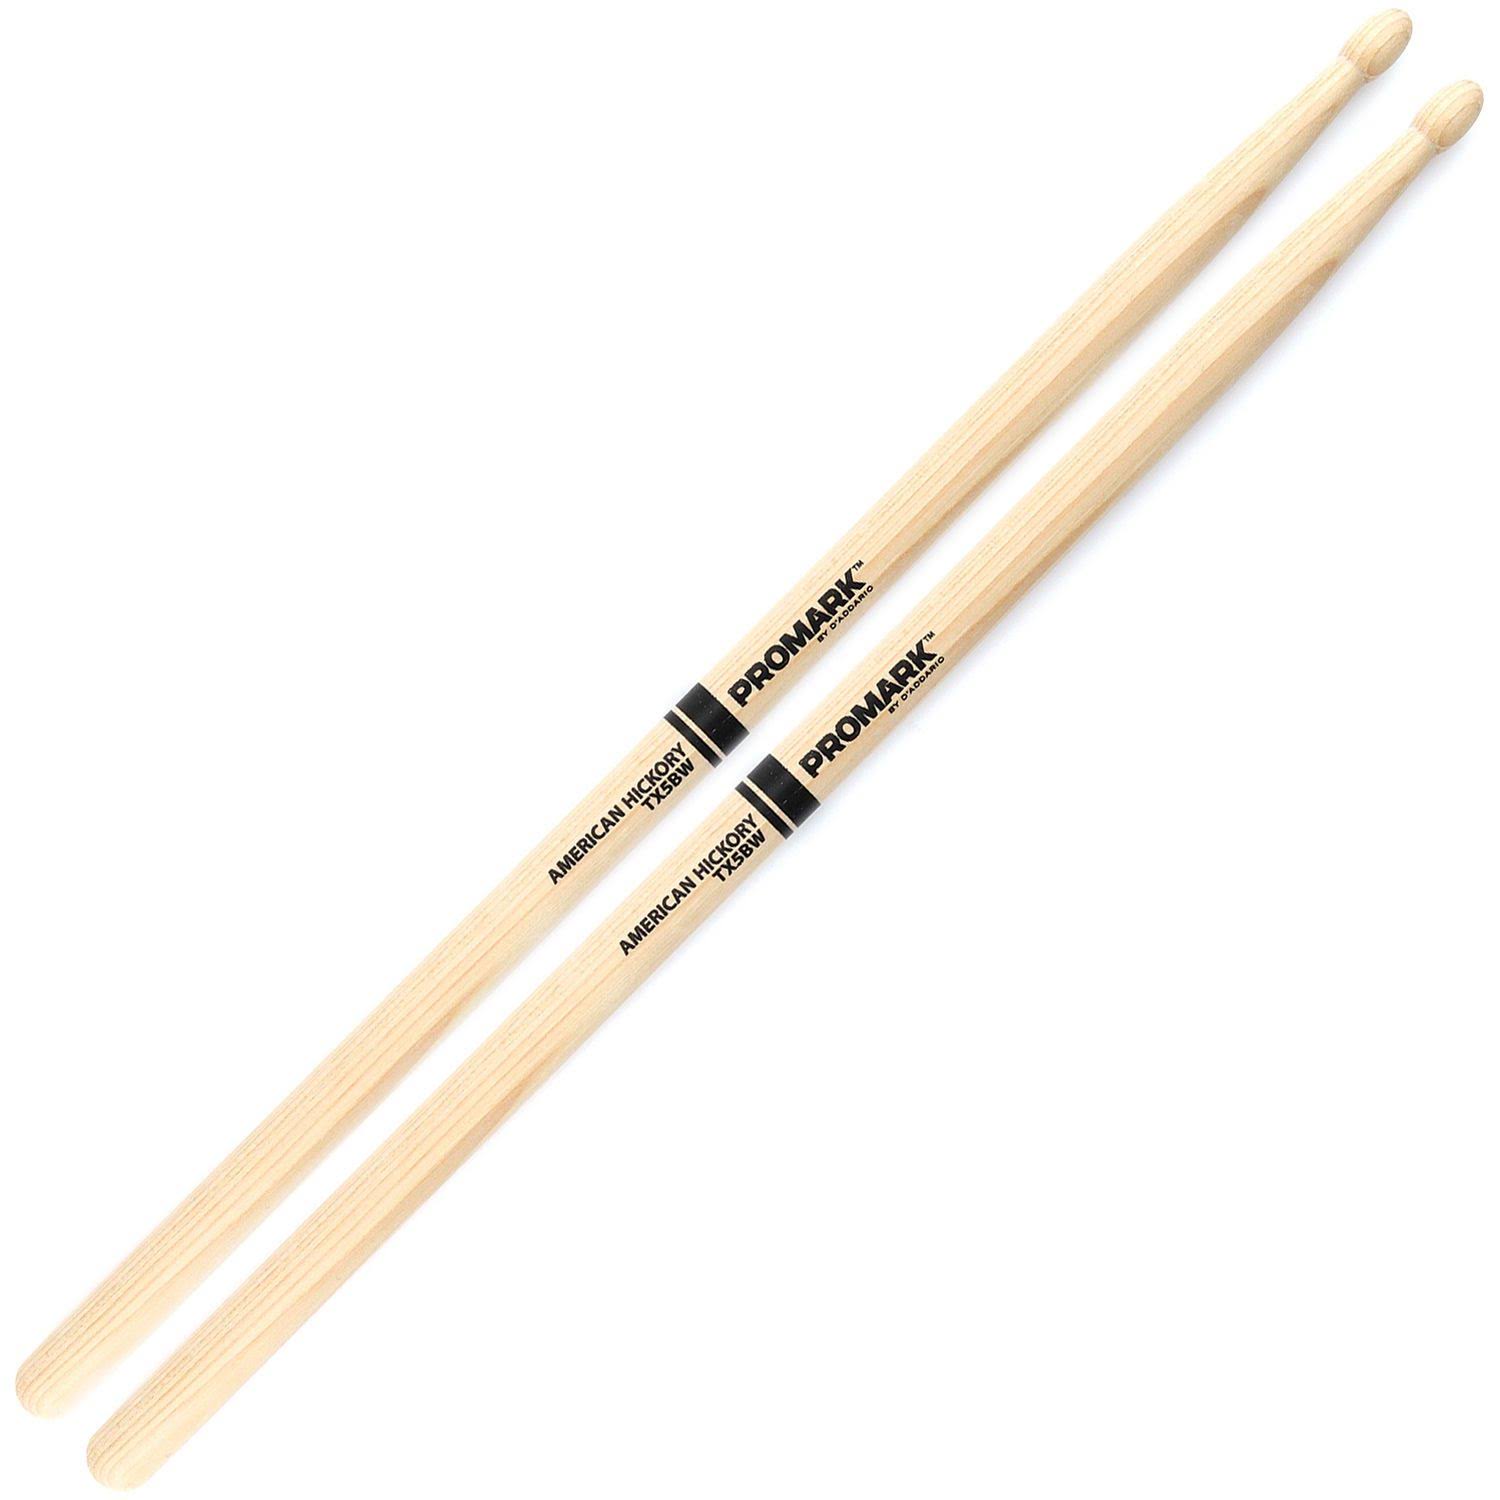 Promark TX5BW Hickory Wood Tip 5B Drumsticks